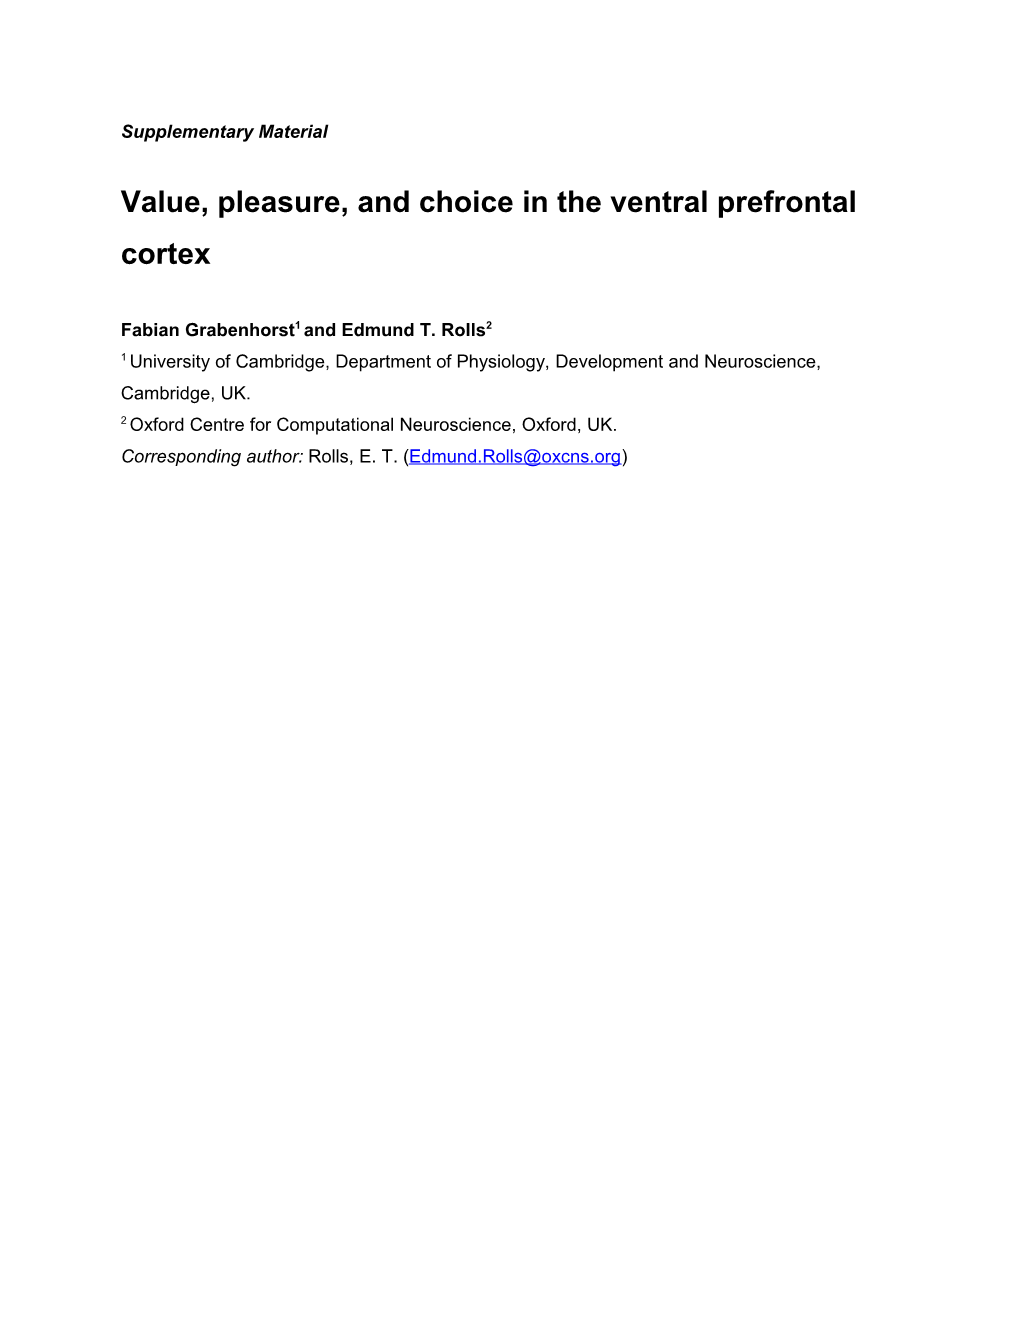 Value, Pleasure, and Choice in the Ventral Prefrontal Cortex